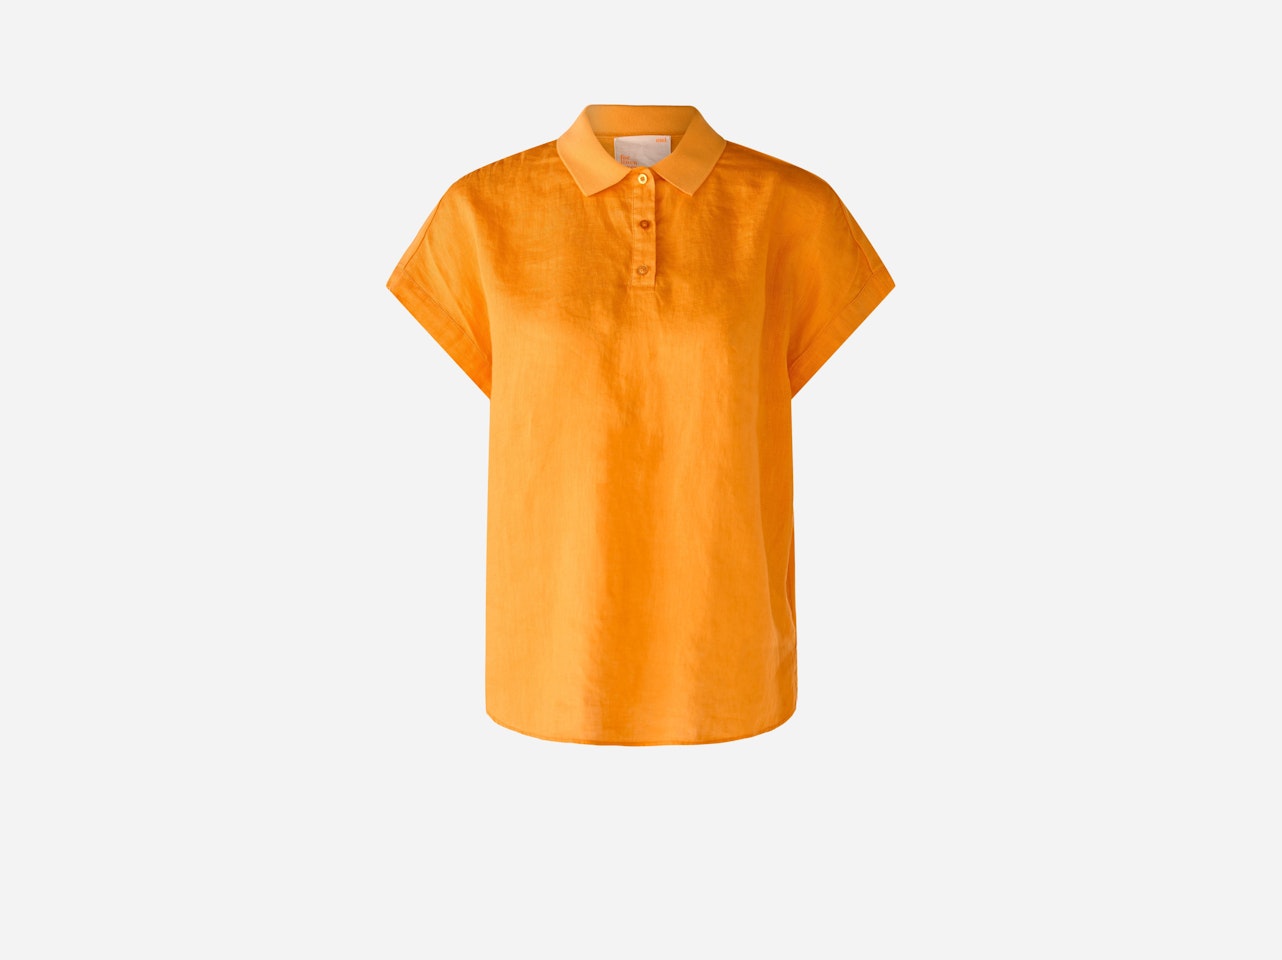 Bild 1 von Linen blouse with jersey patch in flame orange | Oui